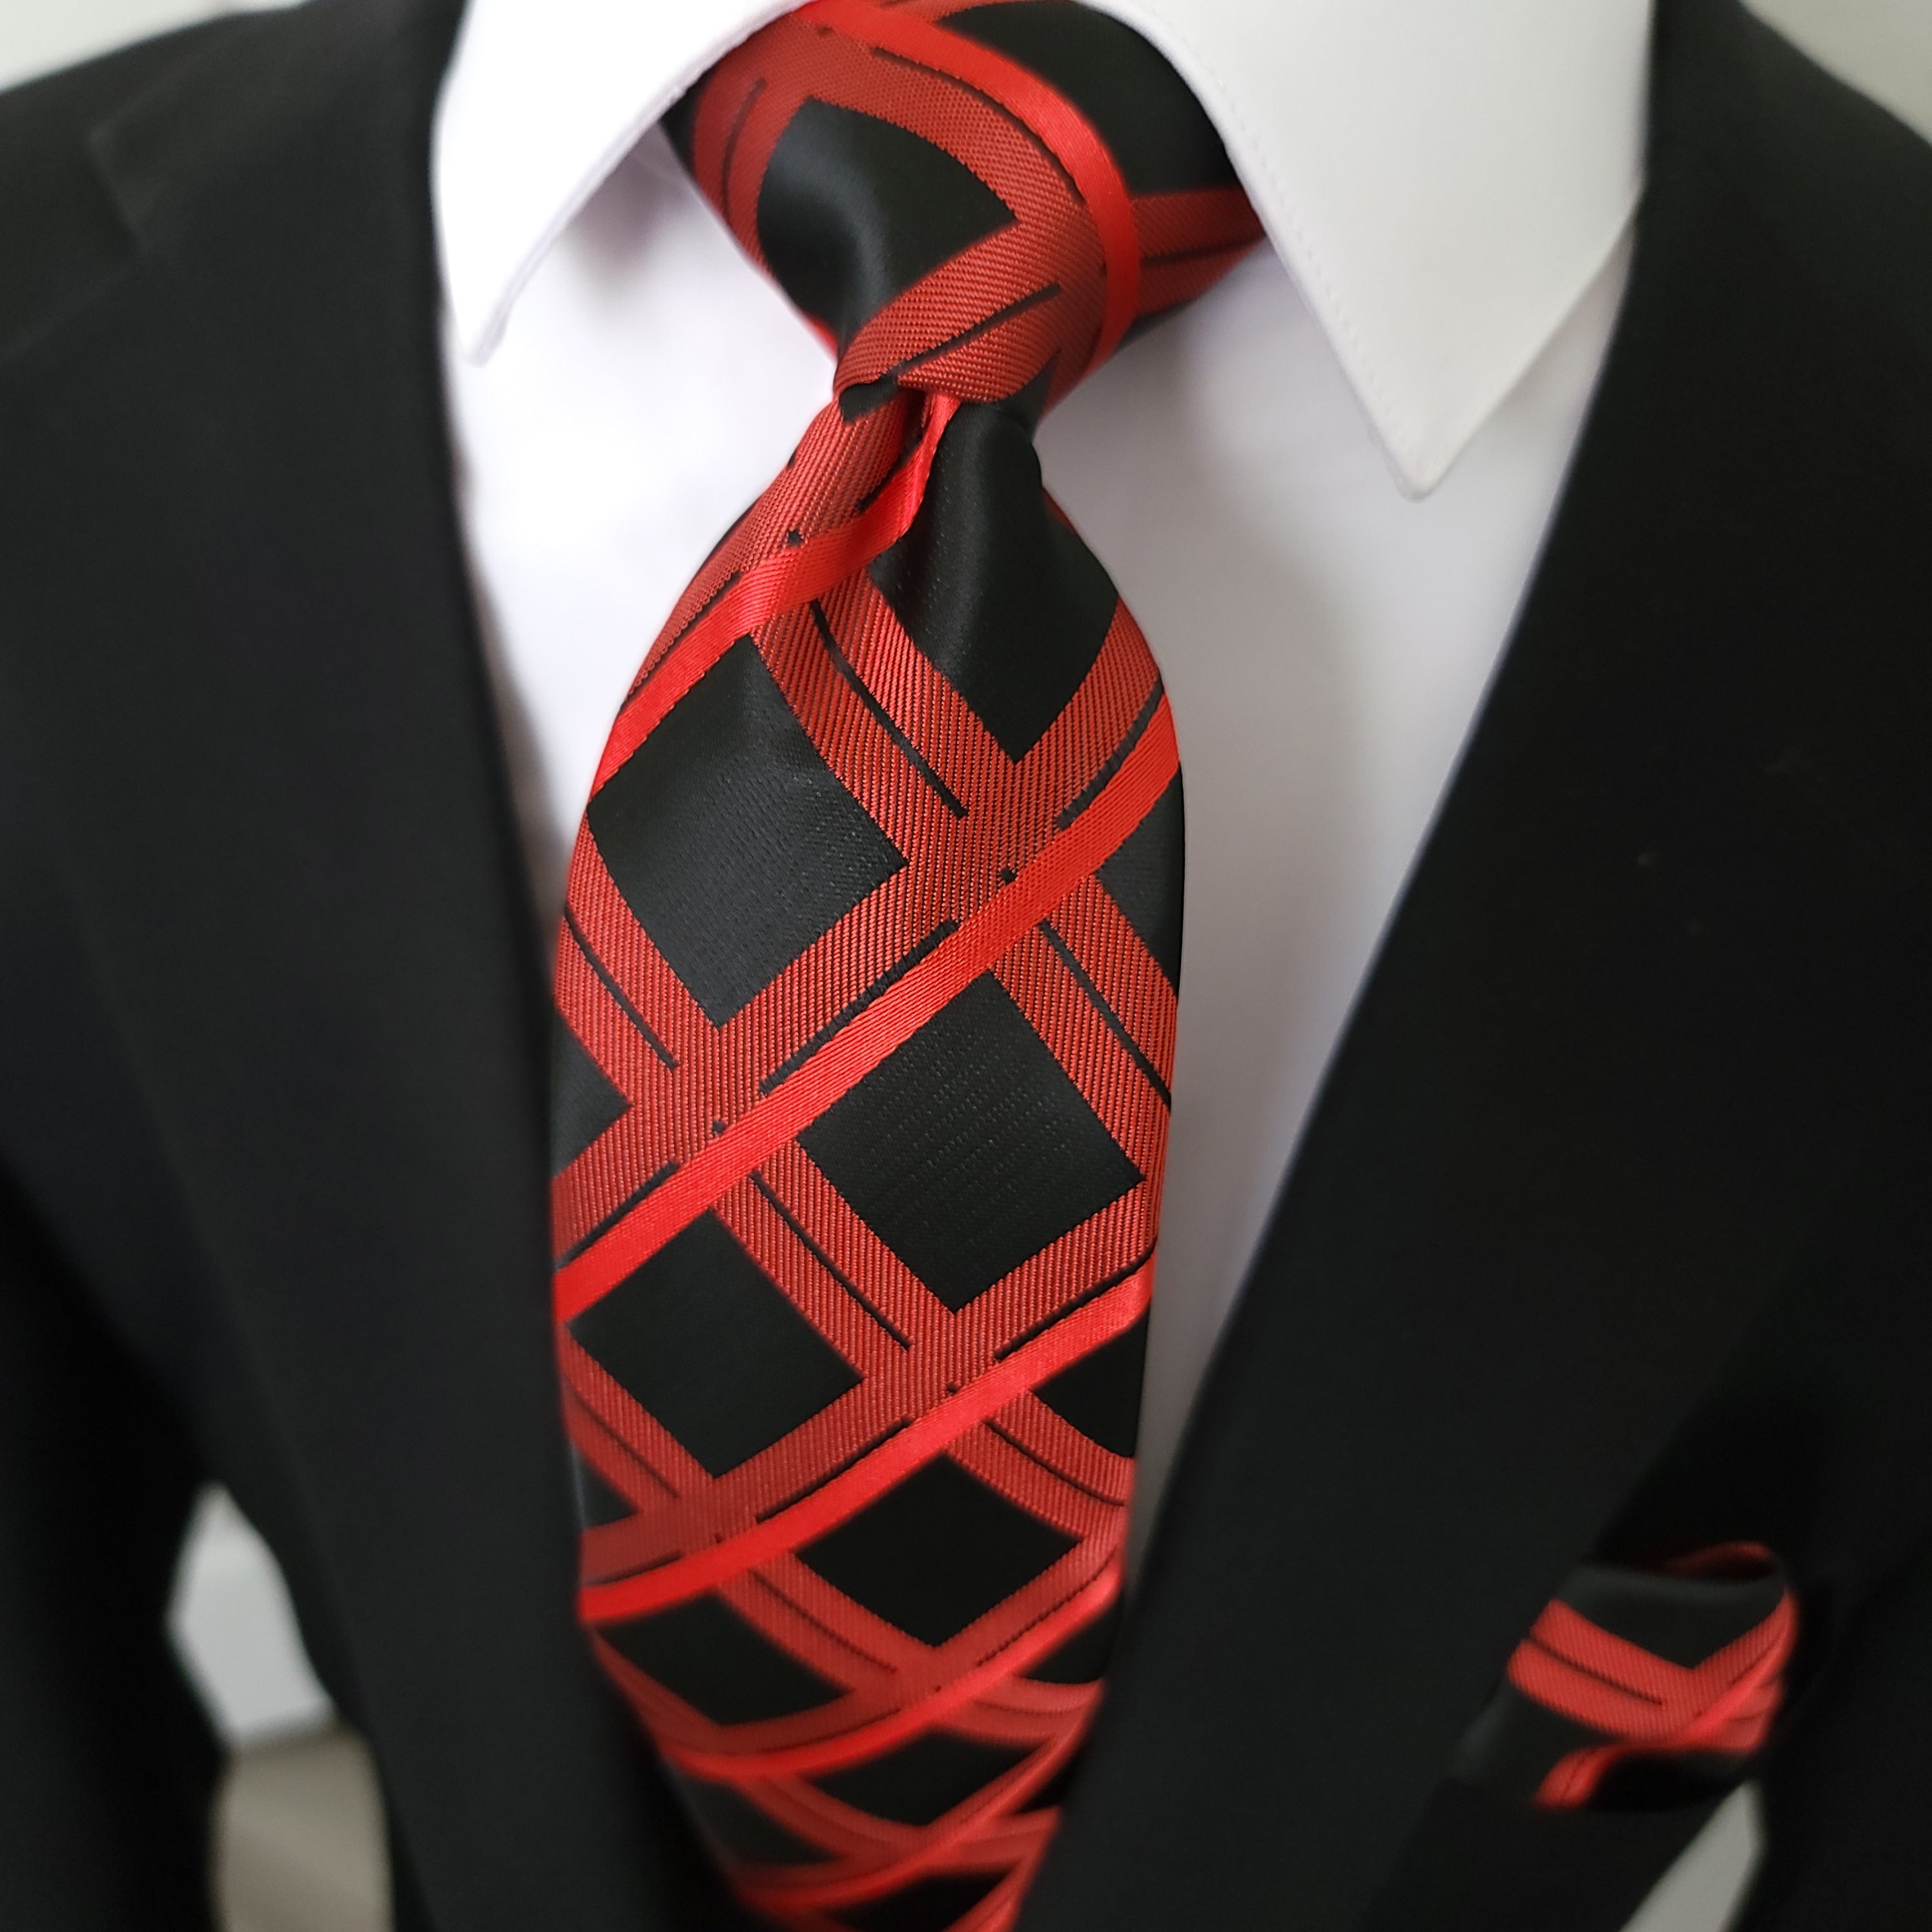 Black Red Plaid Silk Tie Pocket Square Cufflink Set